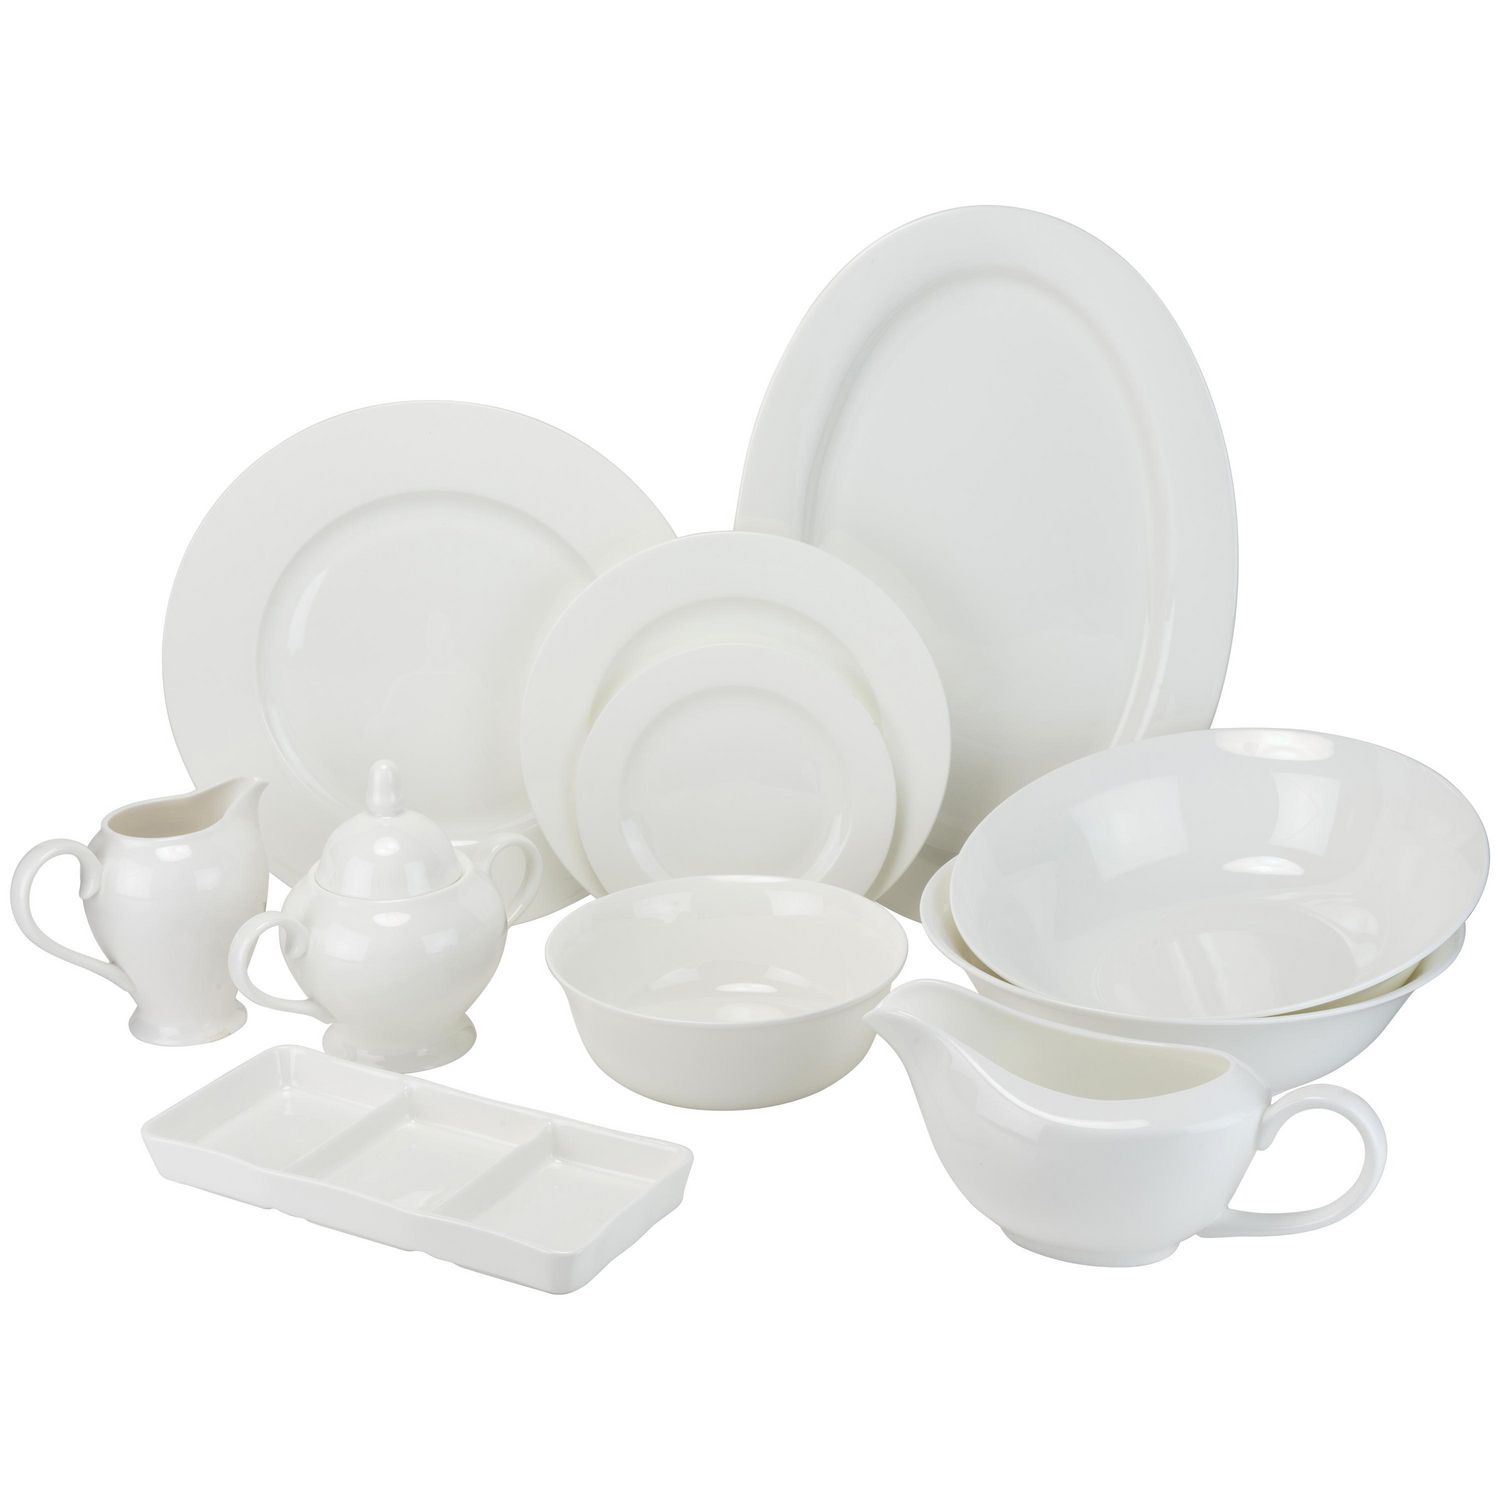 6 pc dinnerware set